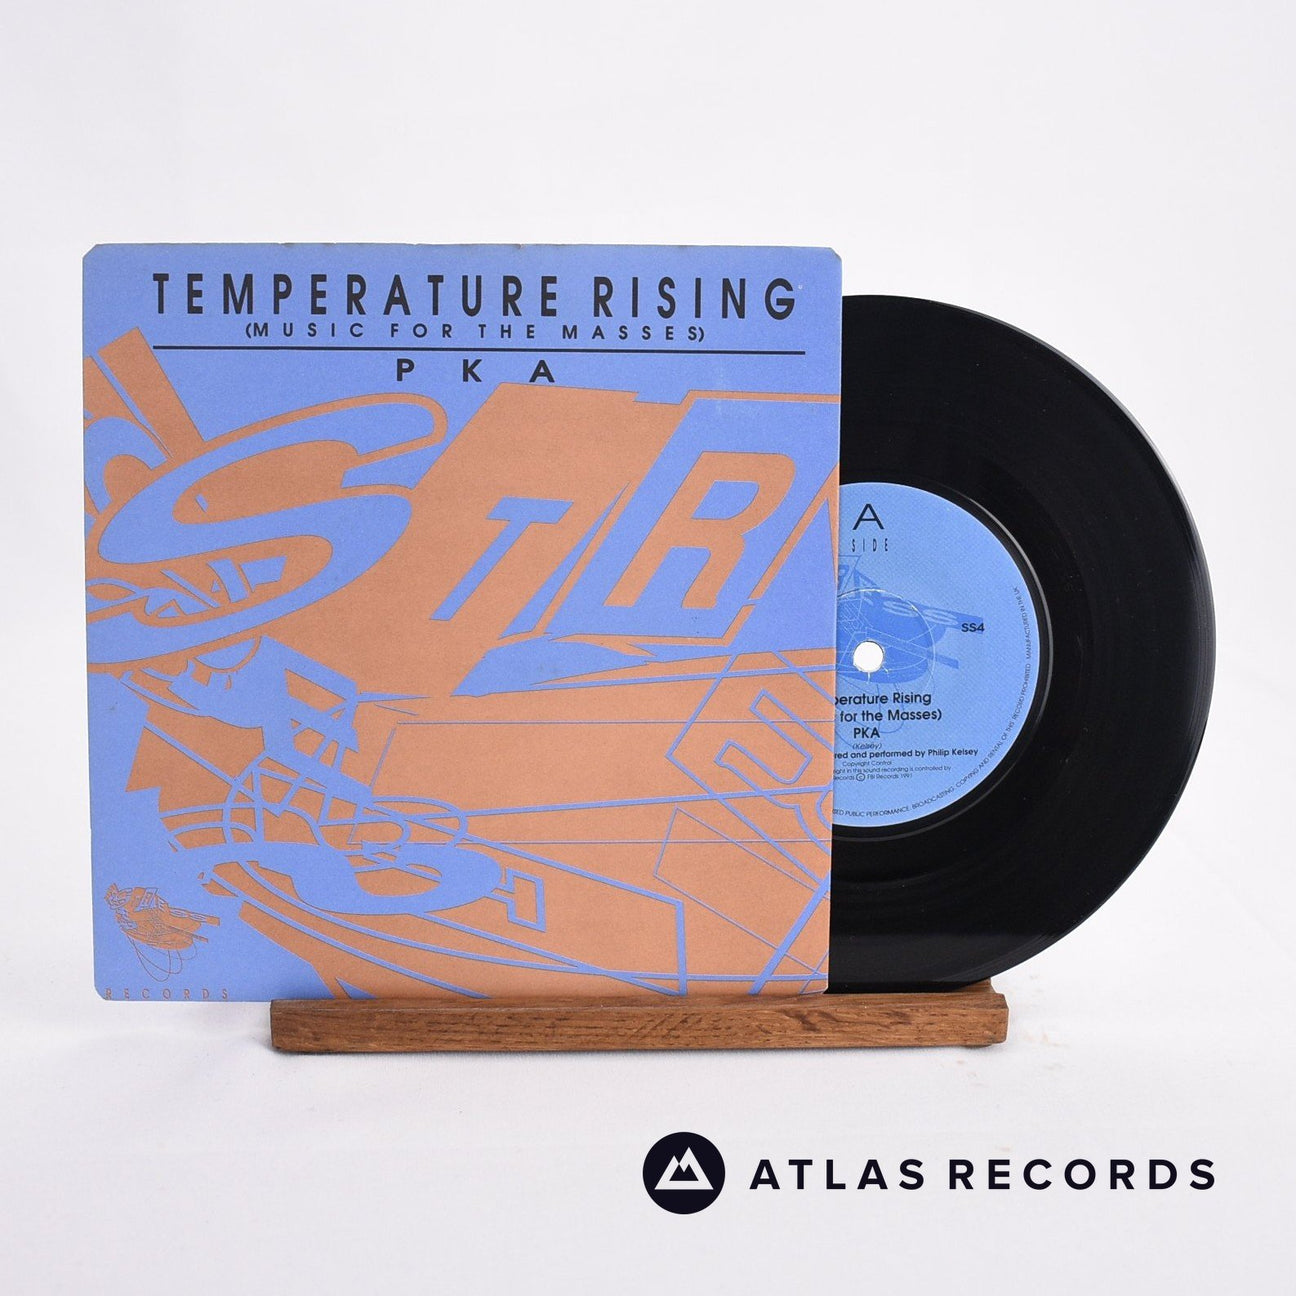 PKA Temperature Rising 7" Vinyl Record - Front Cover & Record